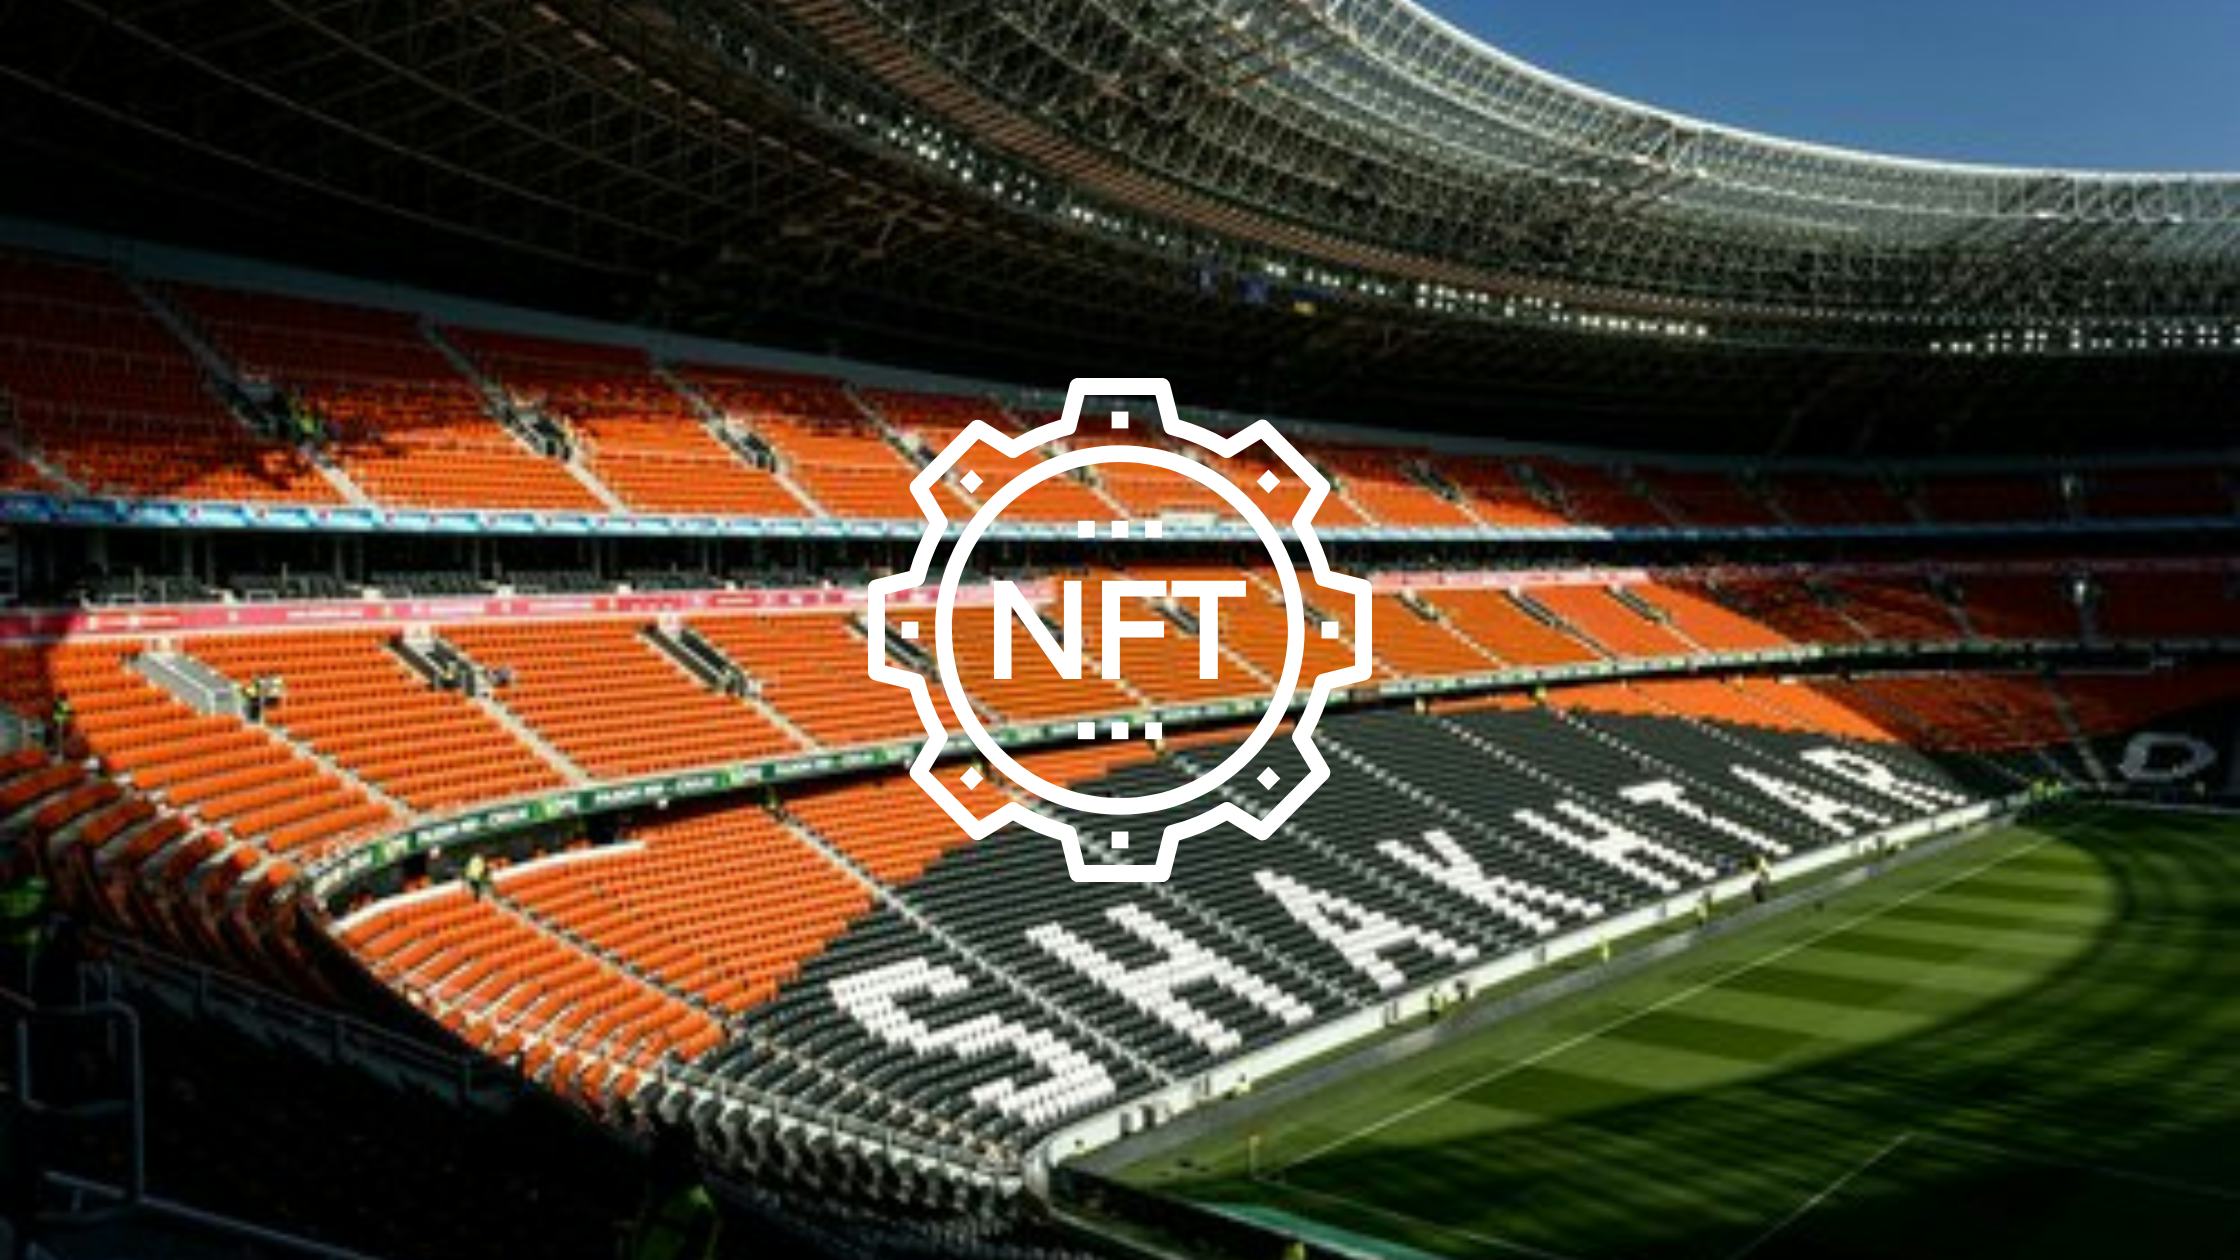 Ukrainian Soccer Club Shakhtar to Raise Humanitarian Funds Through NFT Sale